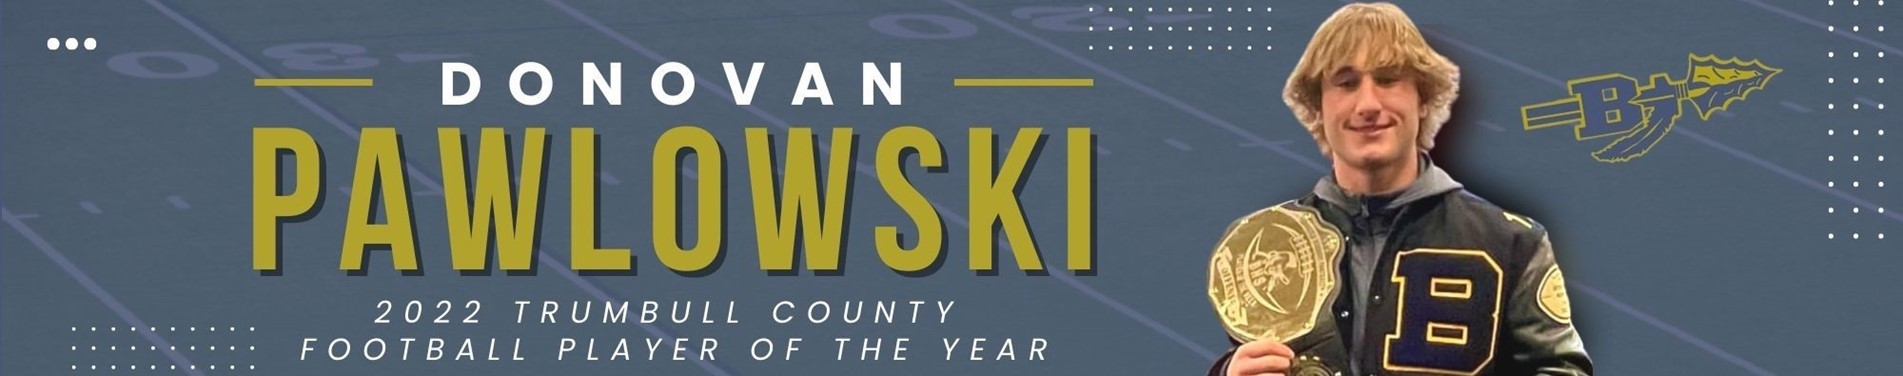 Donovan Pawlowski Trumbull County Football Player of the Year